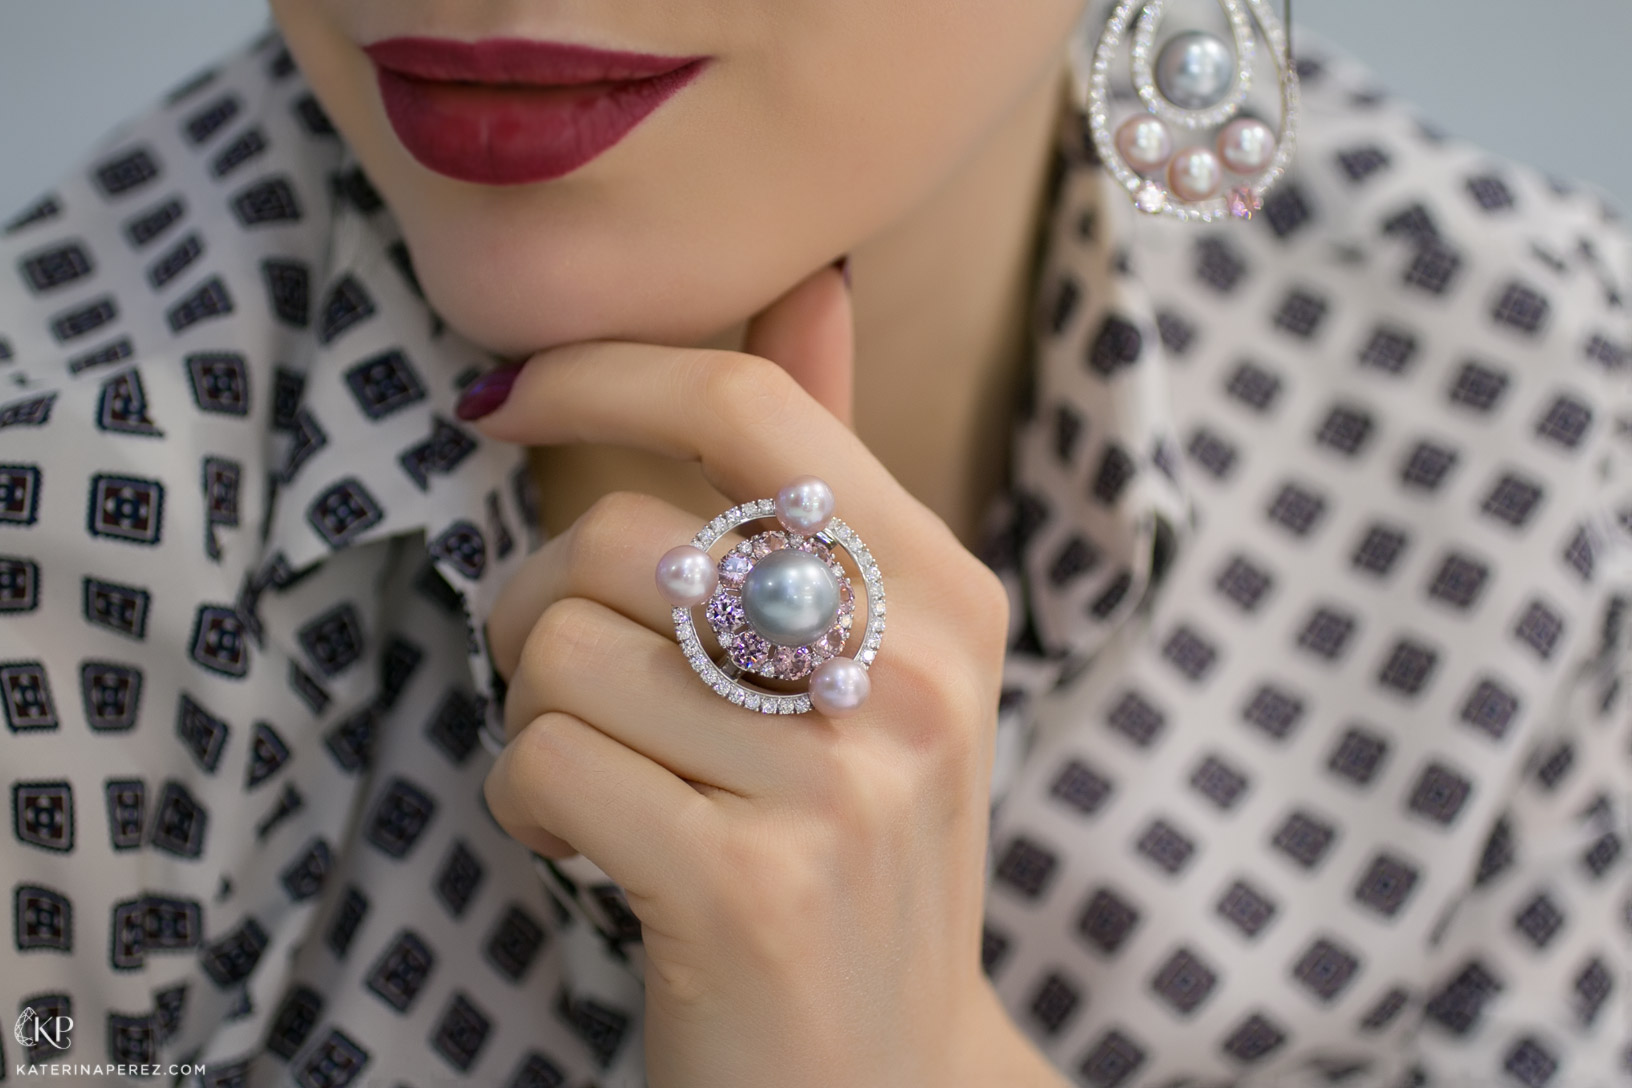 Ksenia and Ilya Podnebesny: when pearls and gemstones are inseparable